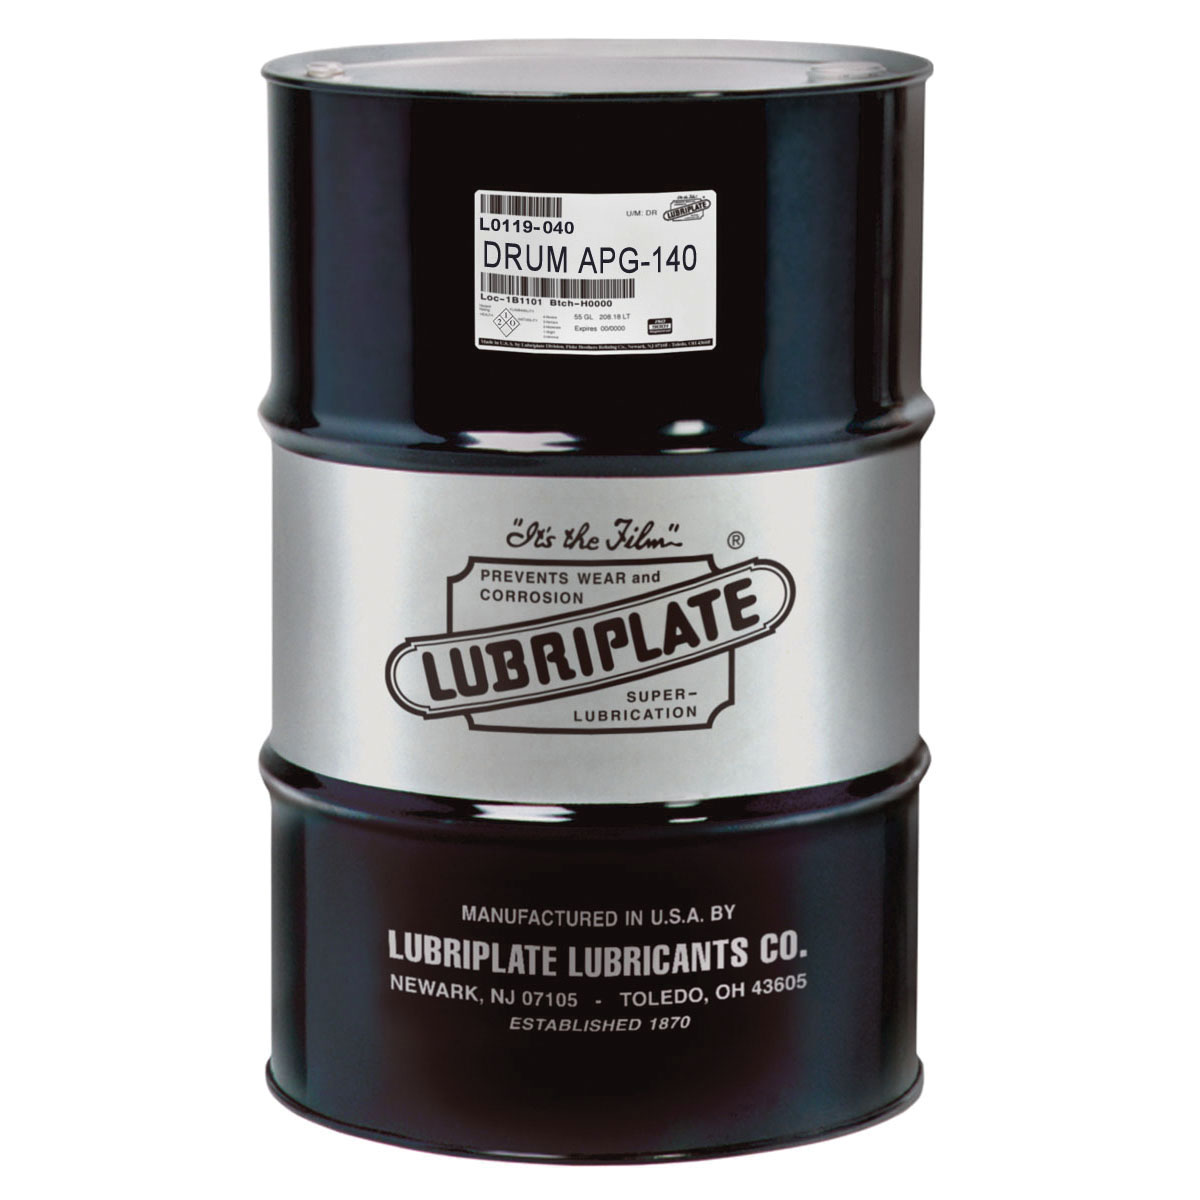 Lubriplate® L0119-040 APG-140 Petroleum Based Gear Oil, 415 lb Drum, Additive Odor/Scent, Liquid Form, ISO 460/SAE 85W-140 Grade, Amber